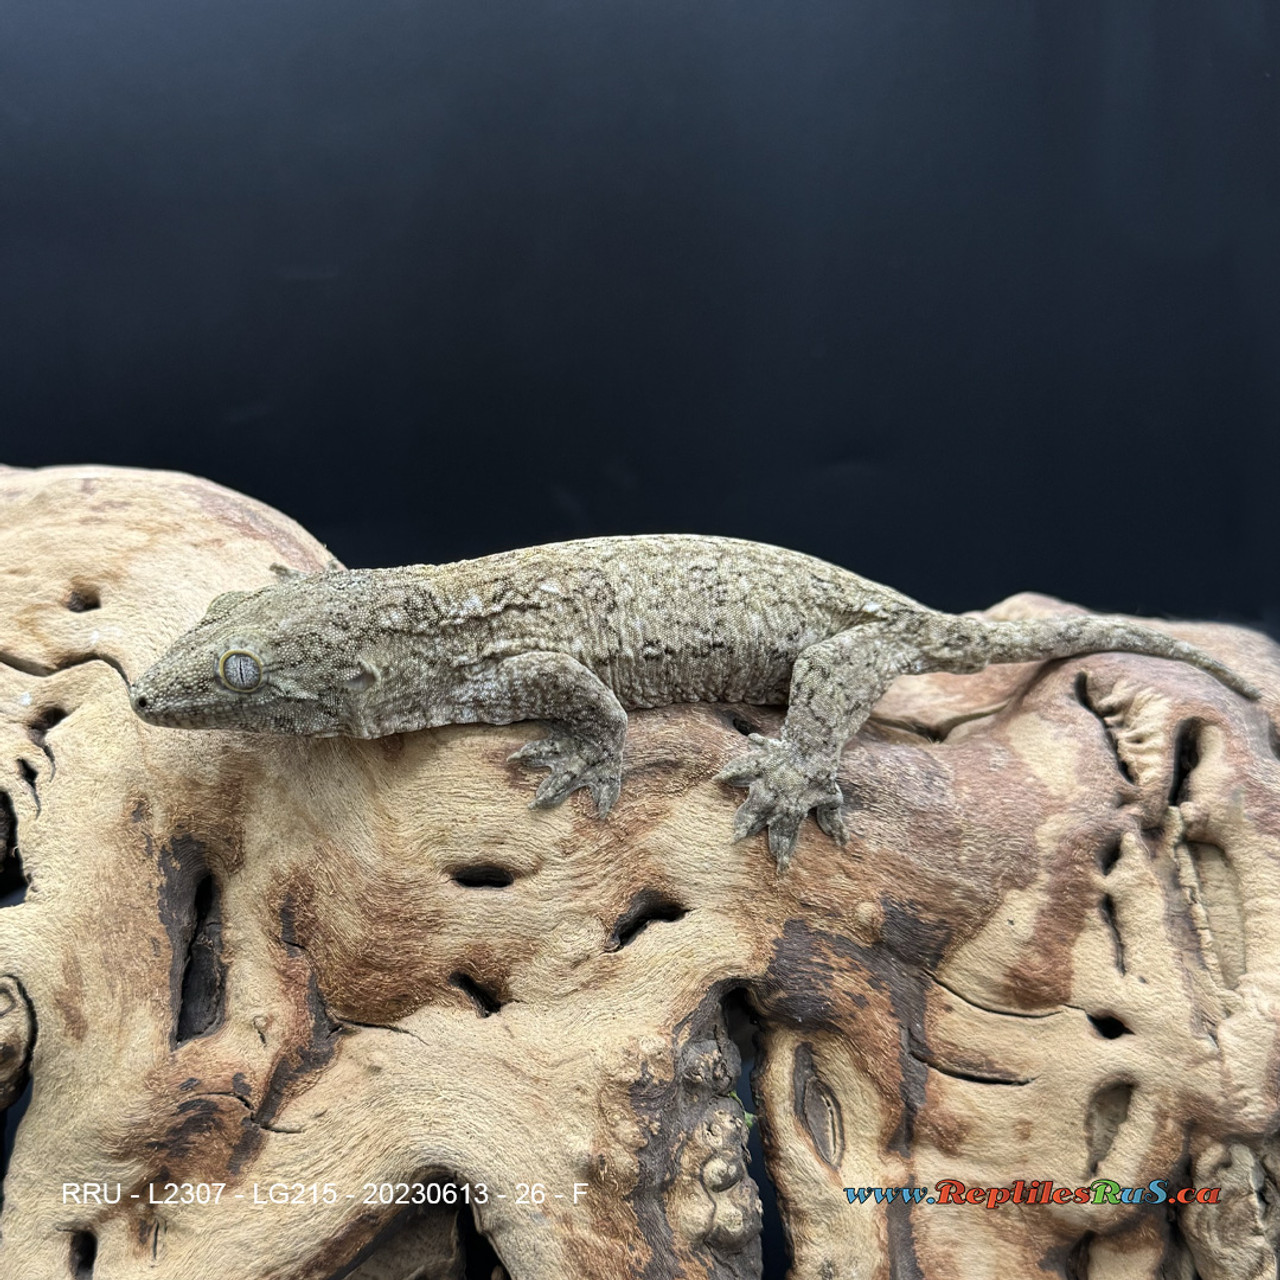 Leachianus Gecko (26g Female) - LG215